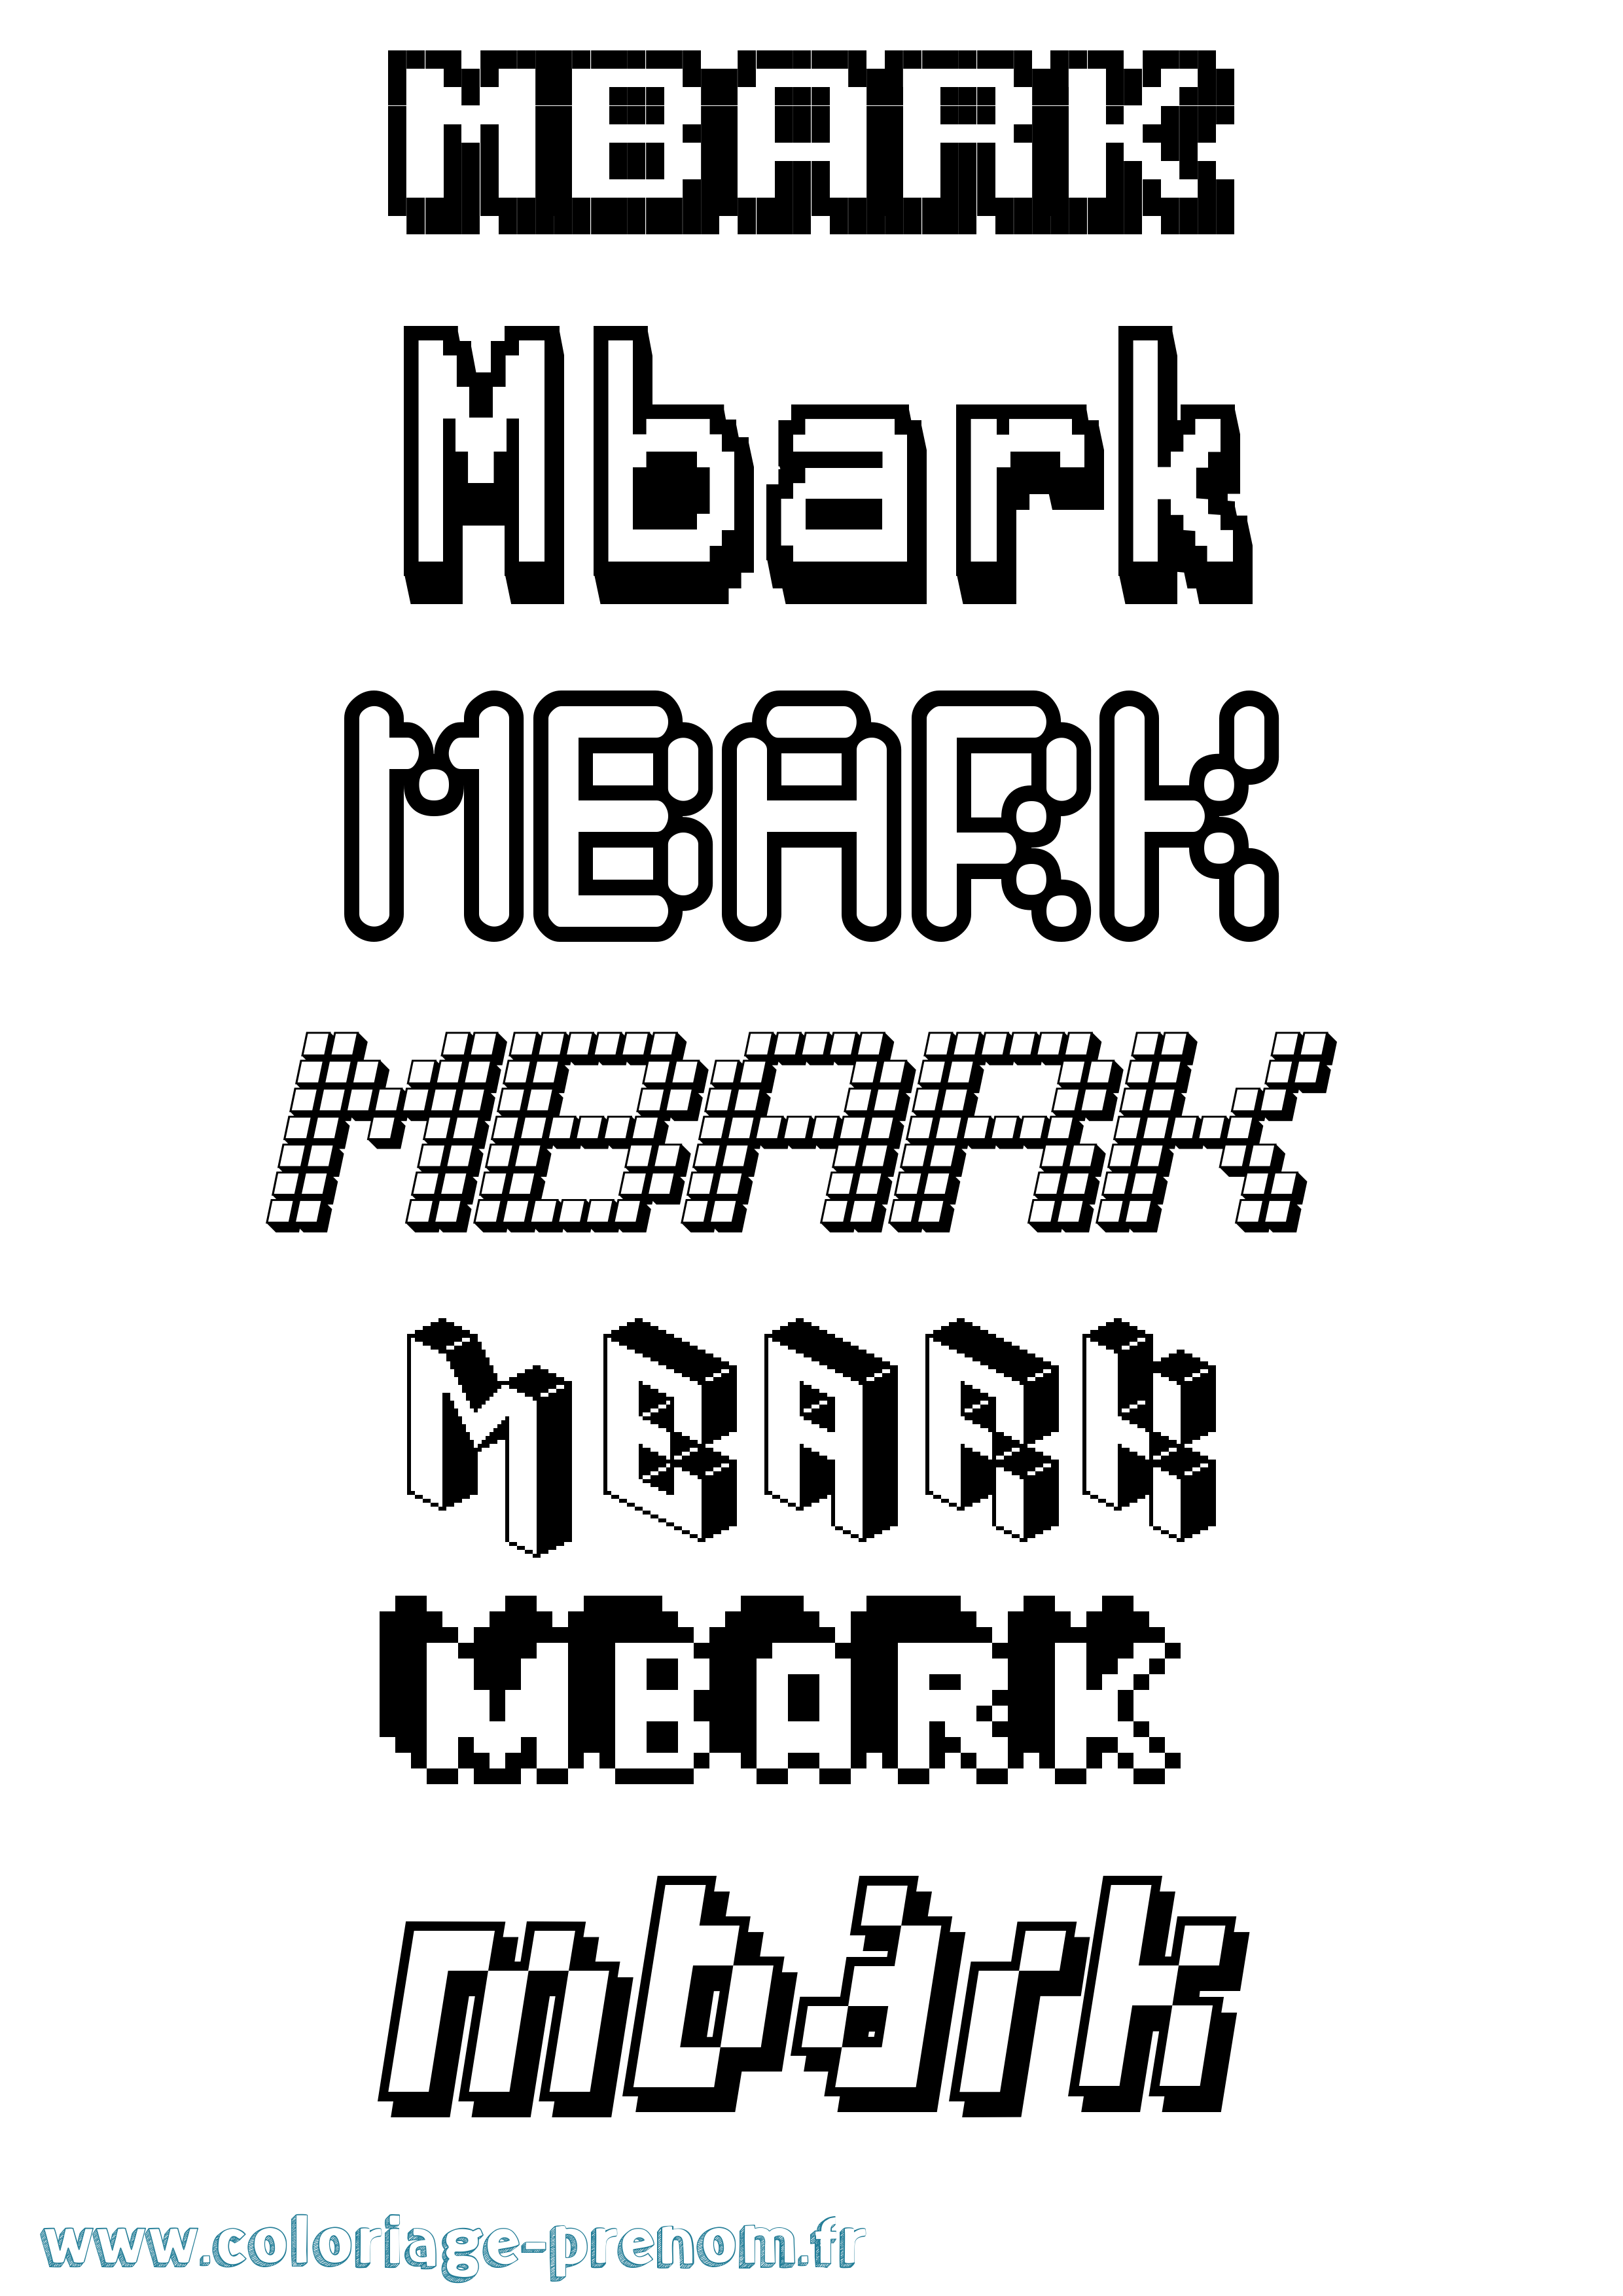 Coloriage prénom Mbark Pixel